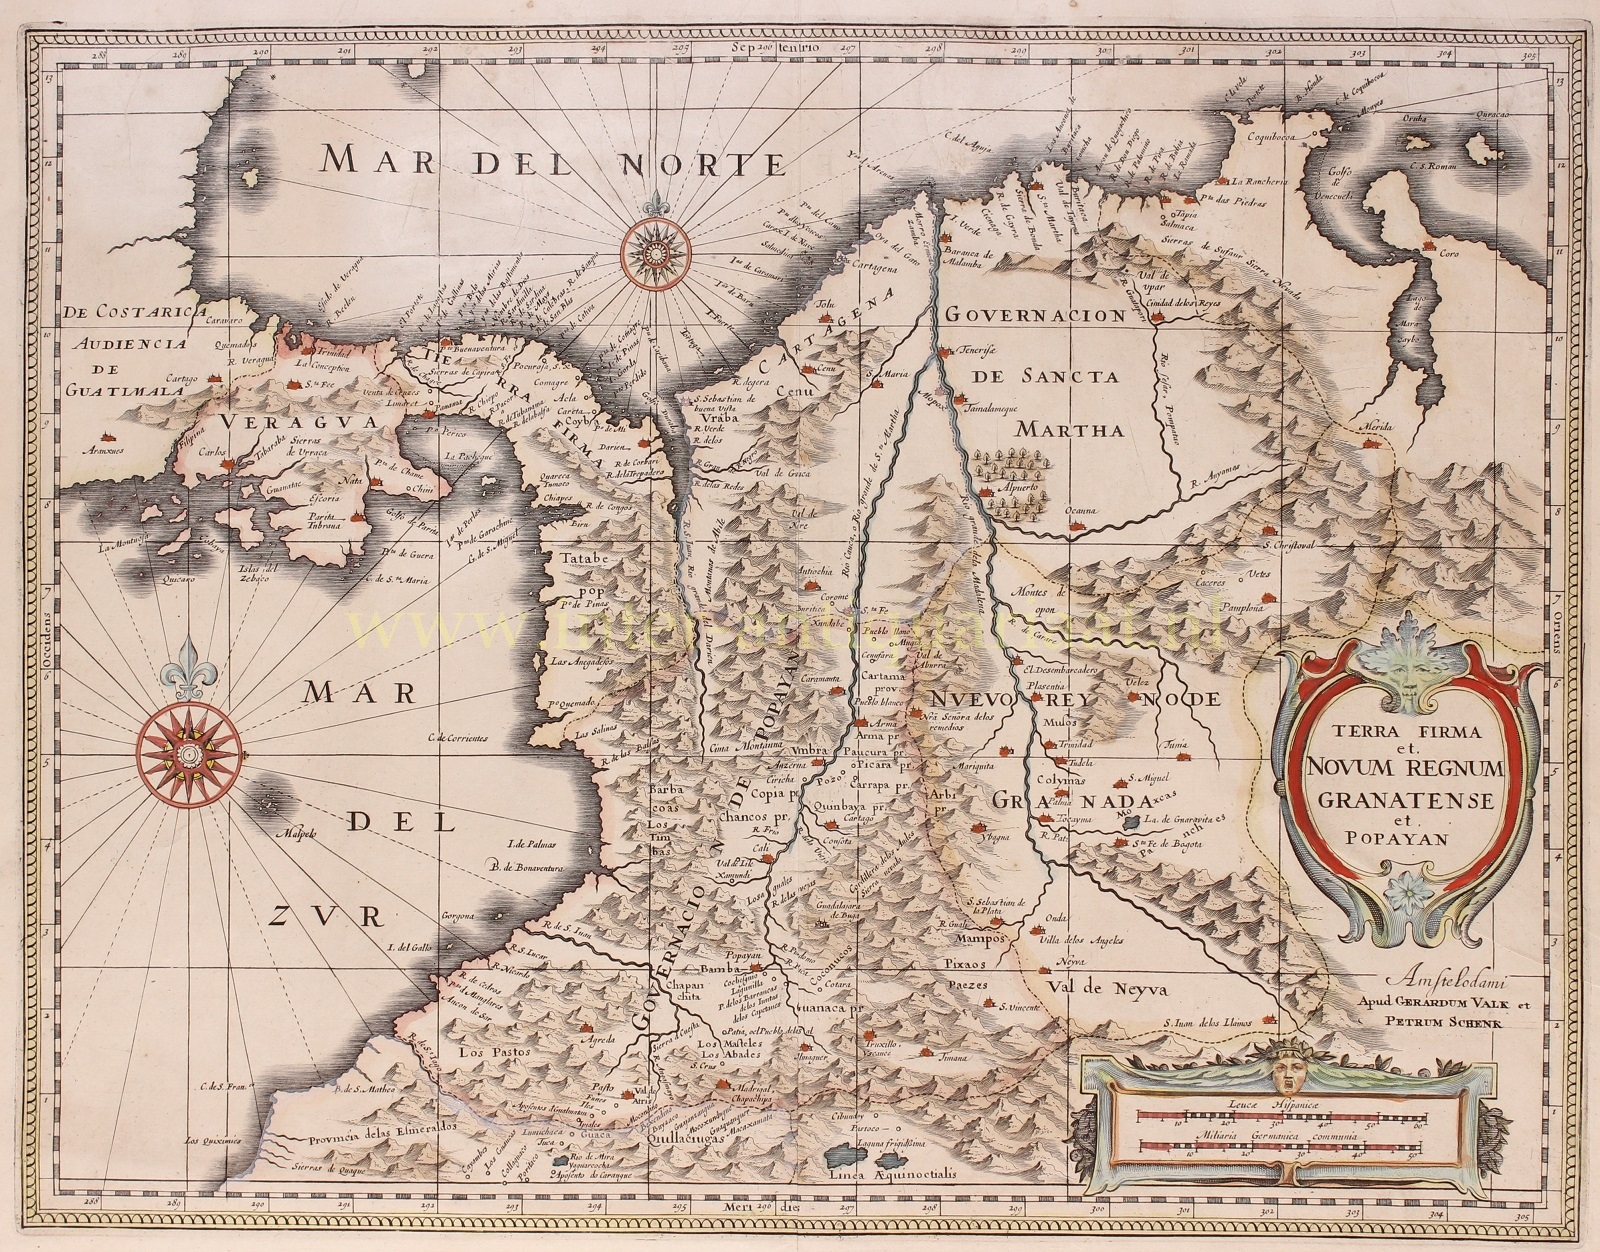 Schenk-- Pieter - Panama, Colombia, Ecuador, Venezuela - Gerard Valck & Petrus Schenk, 1700